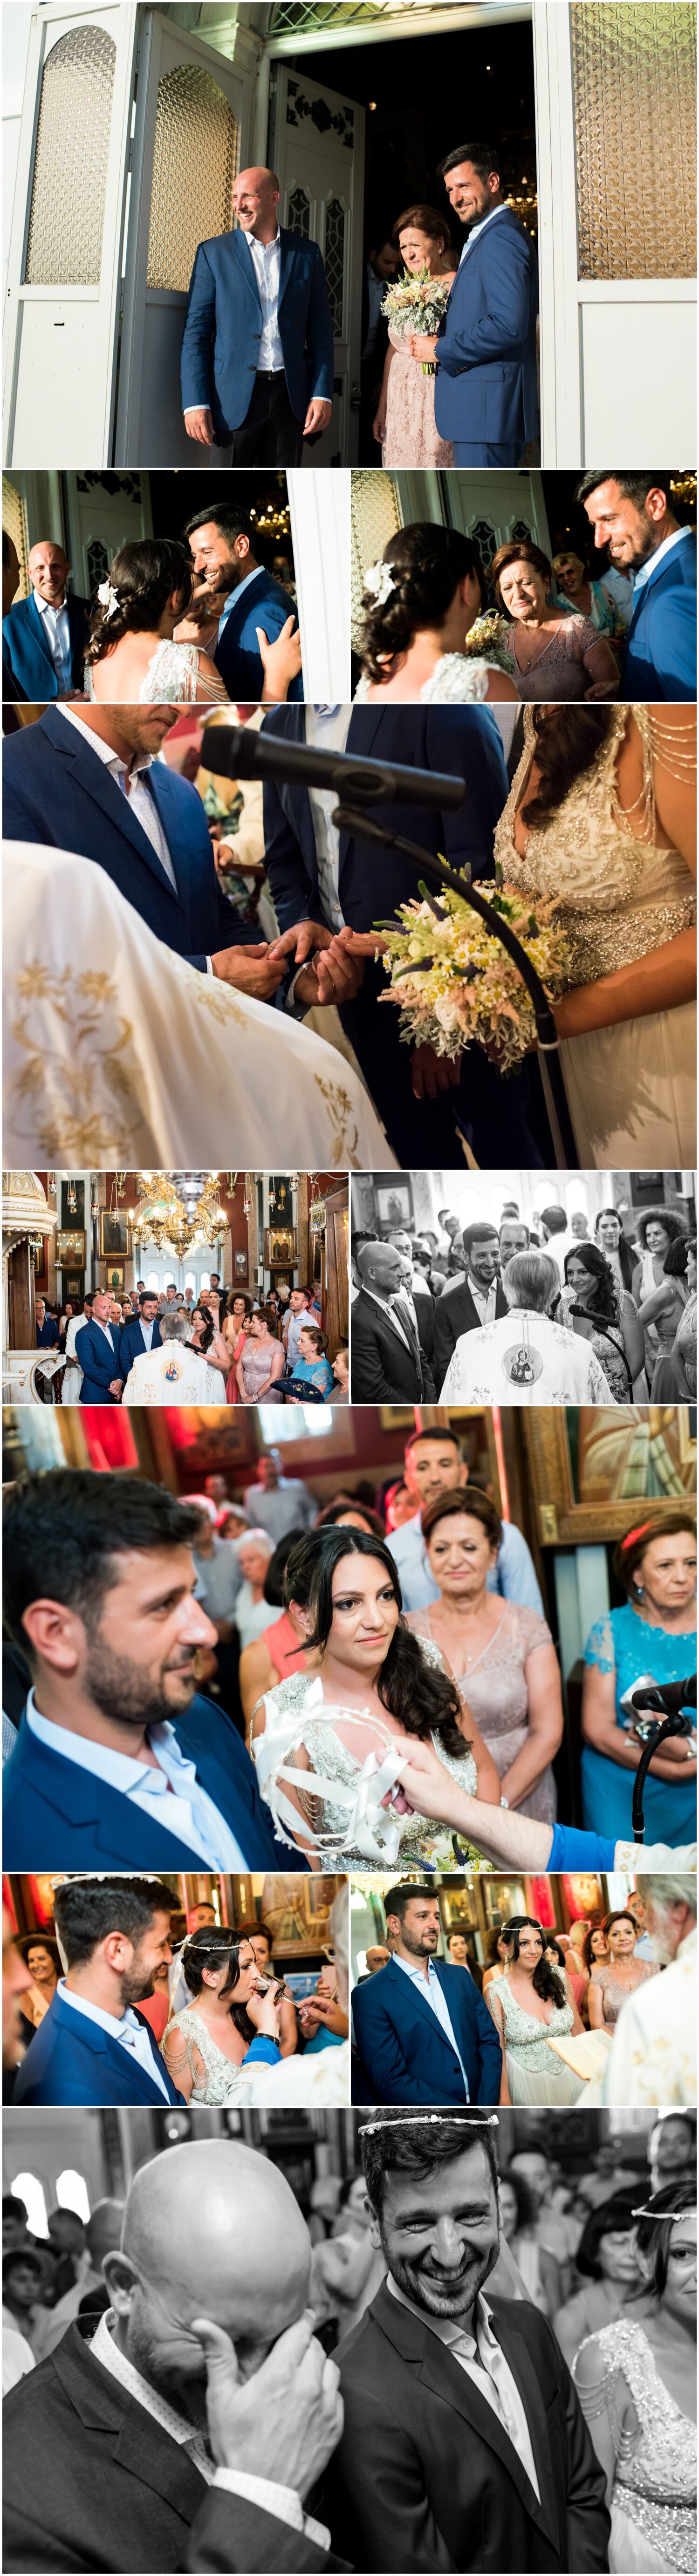 wedding-syros-greece-ono-concept-ricky-baillie-photography_0005.jpg